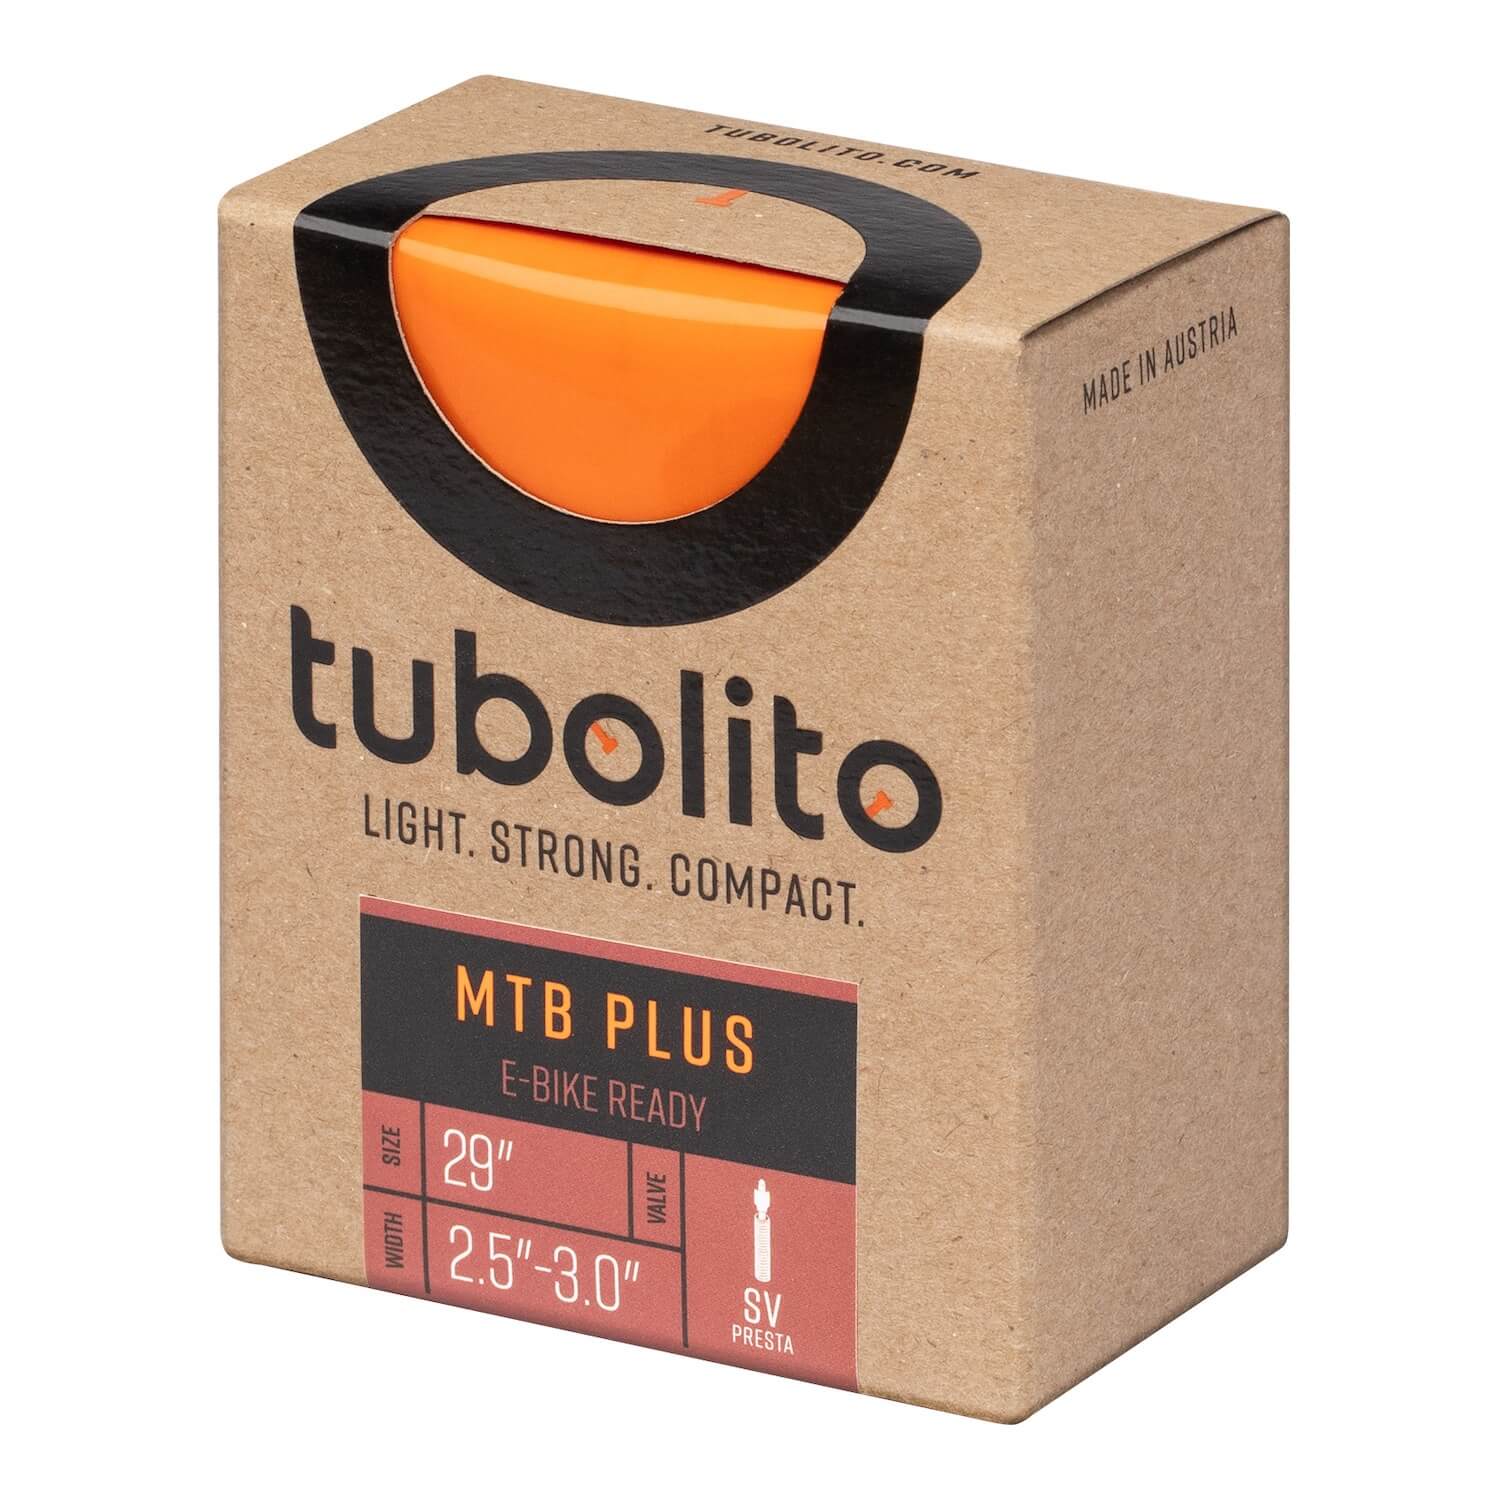 Tubolito MTB Plus 29 płynność